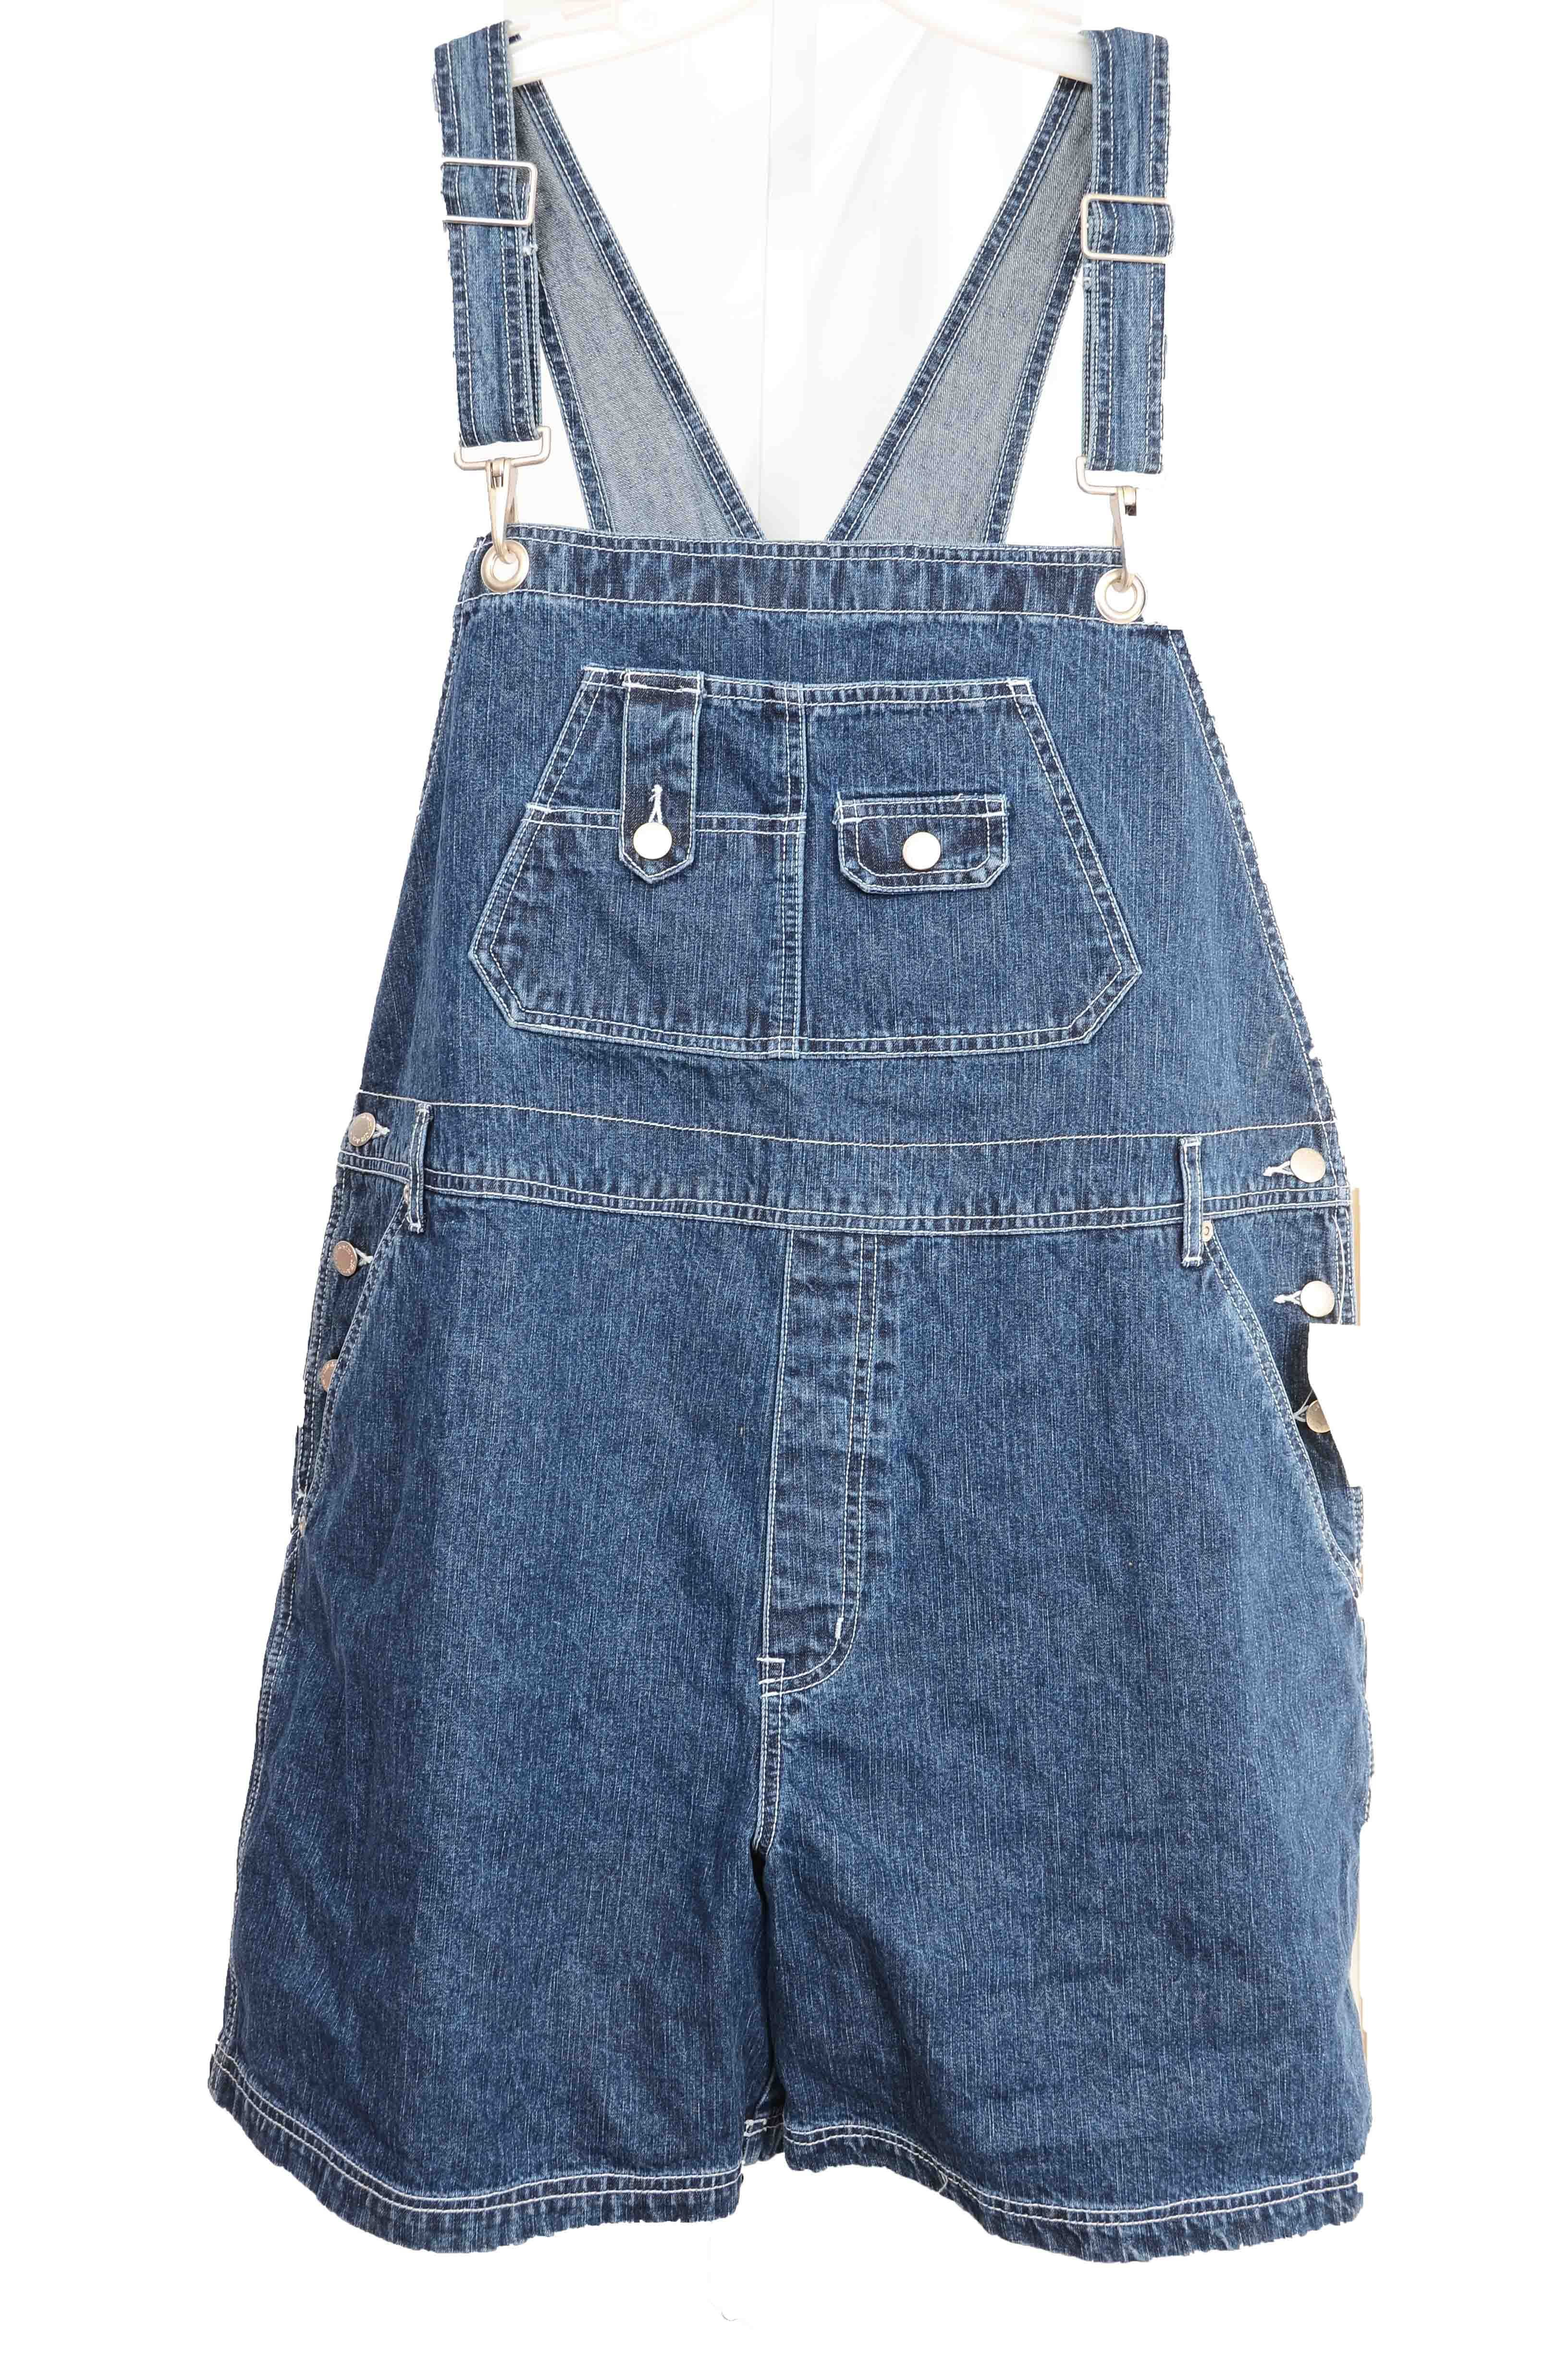 jean short overalls womens